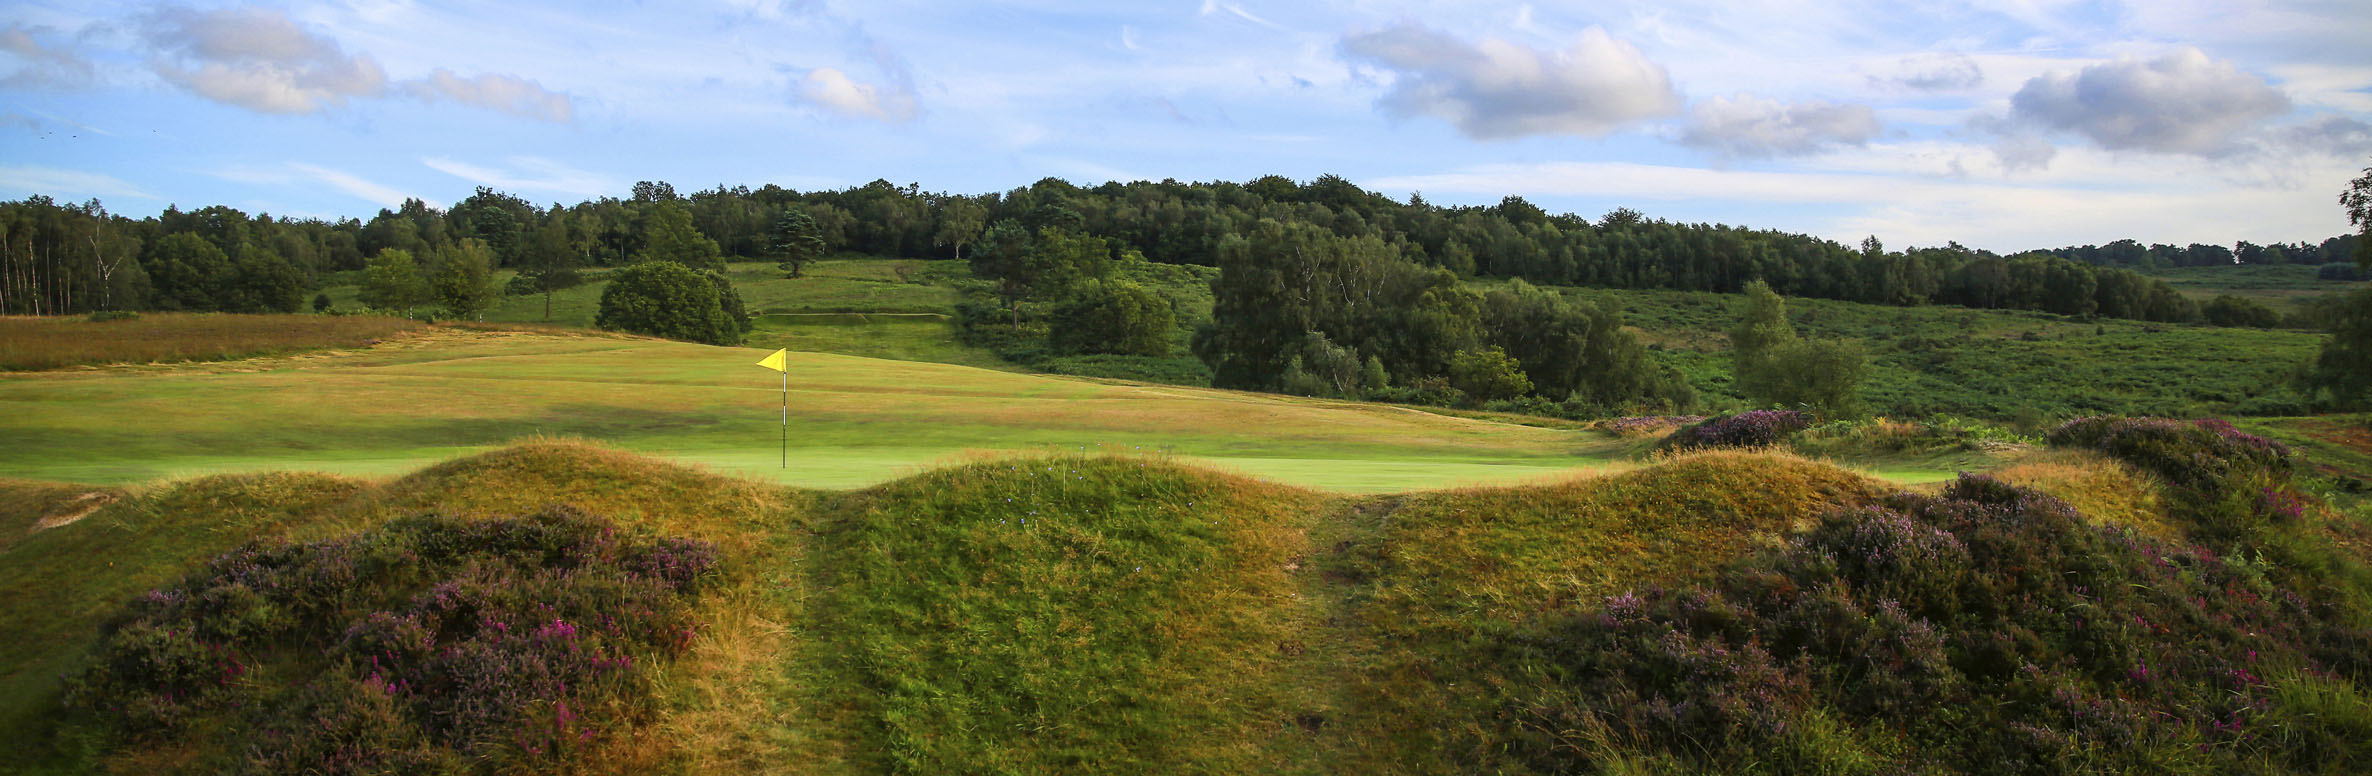 Golf Course Image - Royal Ashdown Forets Golf Club No. 11